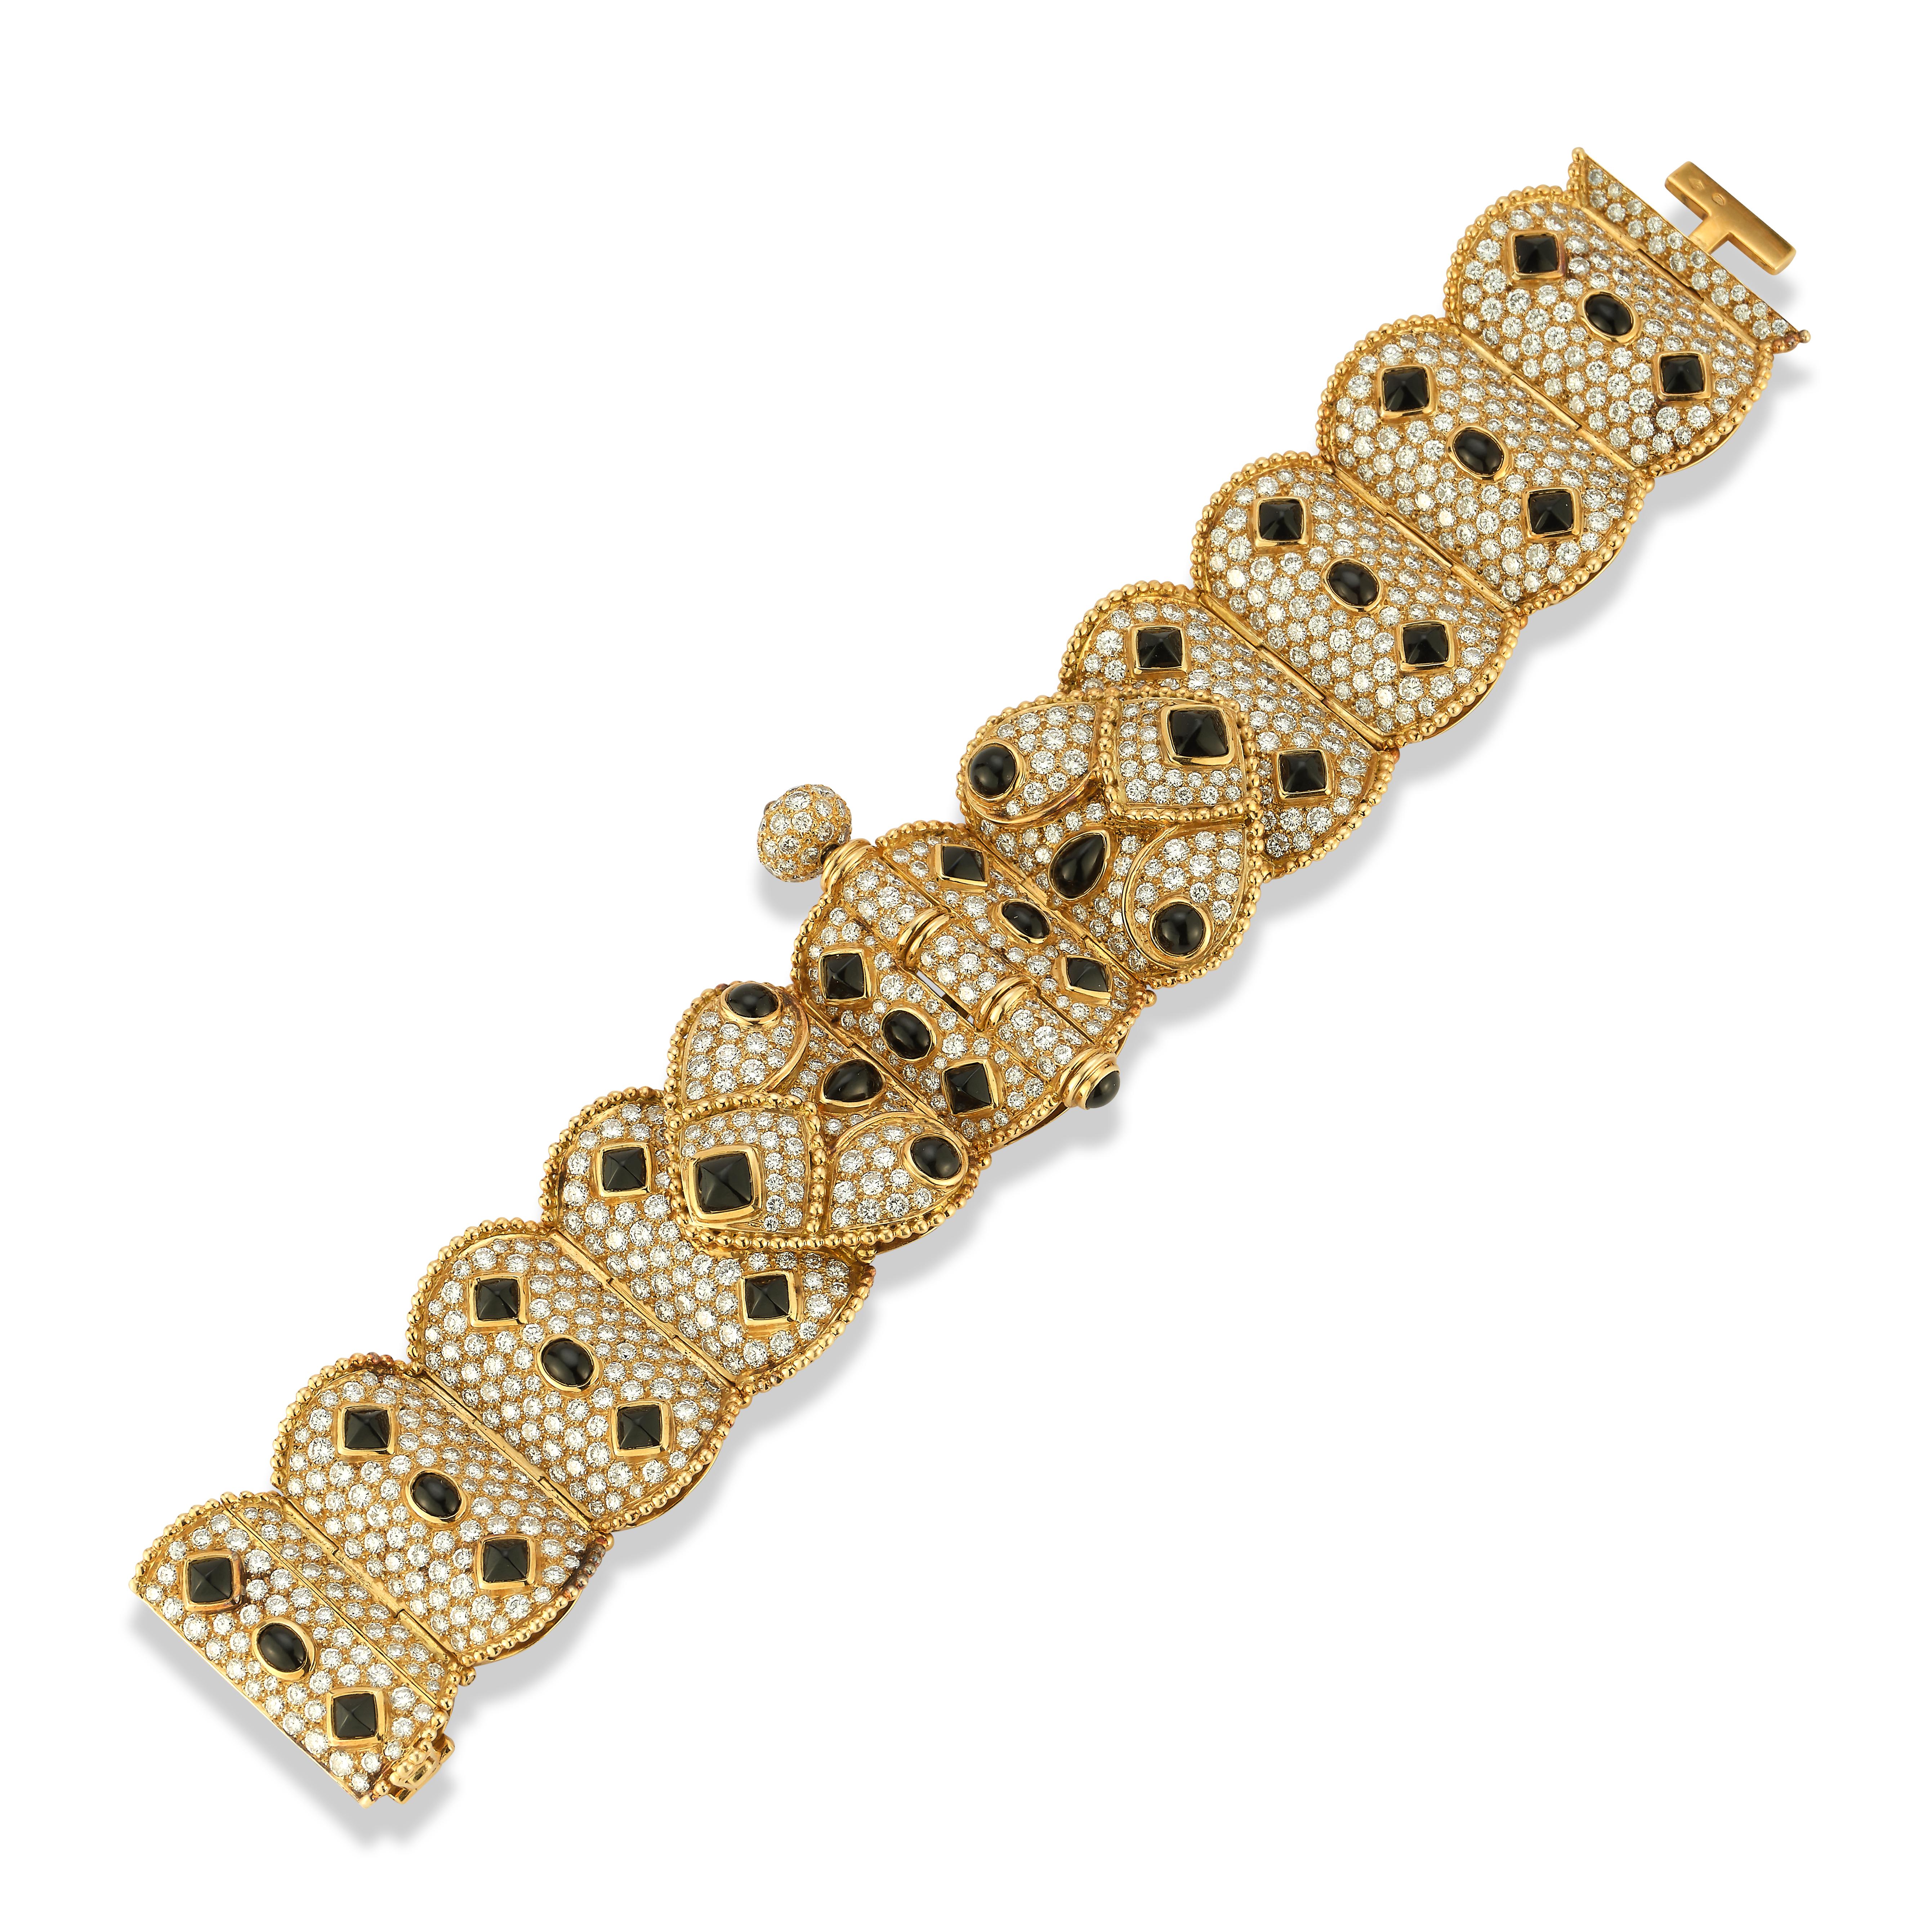 Boucheron Diamond & Onyx Gold Bracelet

An 18 karat gold bracelet set with 37 onyx stones and 733 round cut diamonds weighing approximately 16.5 carats

Signed Boucheron

Measurements: 7.5